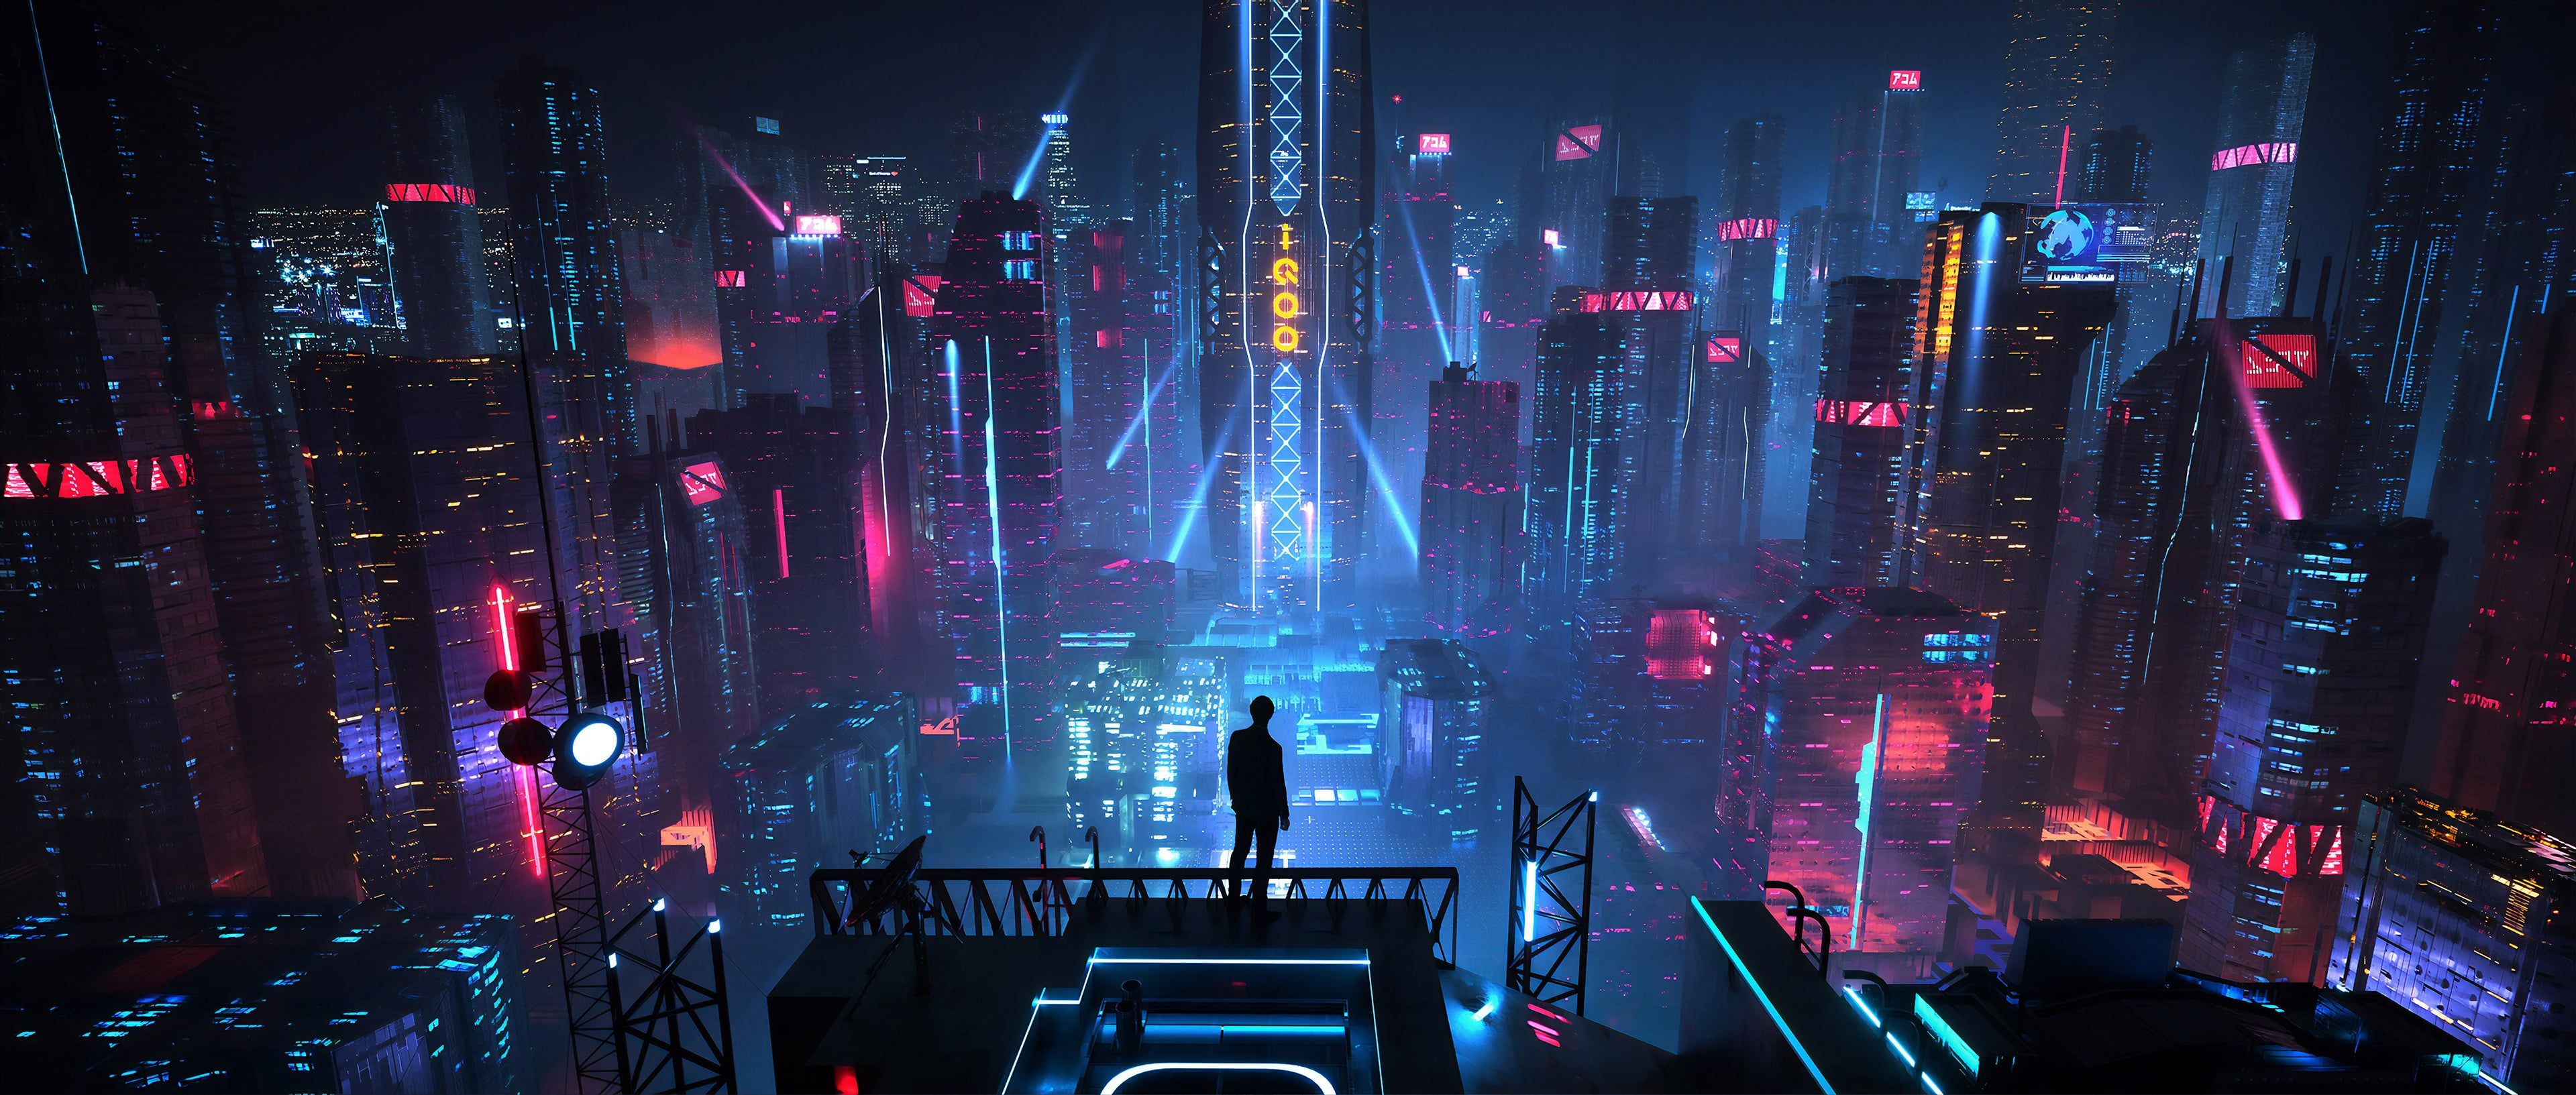 Download wallpaper: Cyberpunk 2077 city view 2560x1440